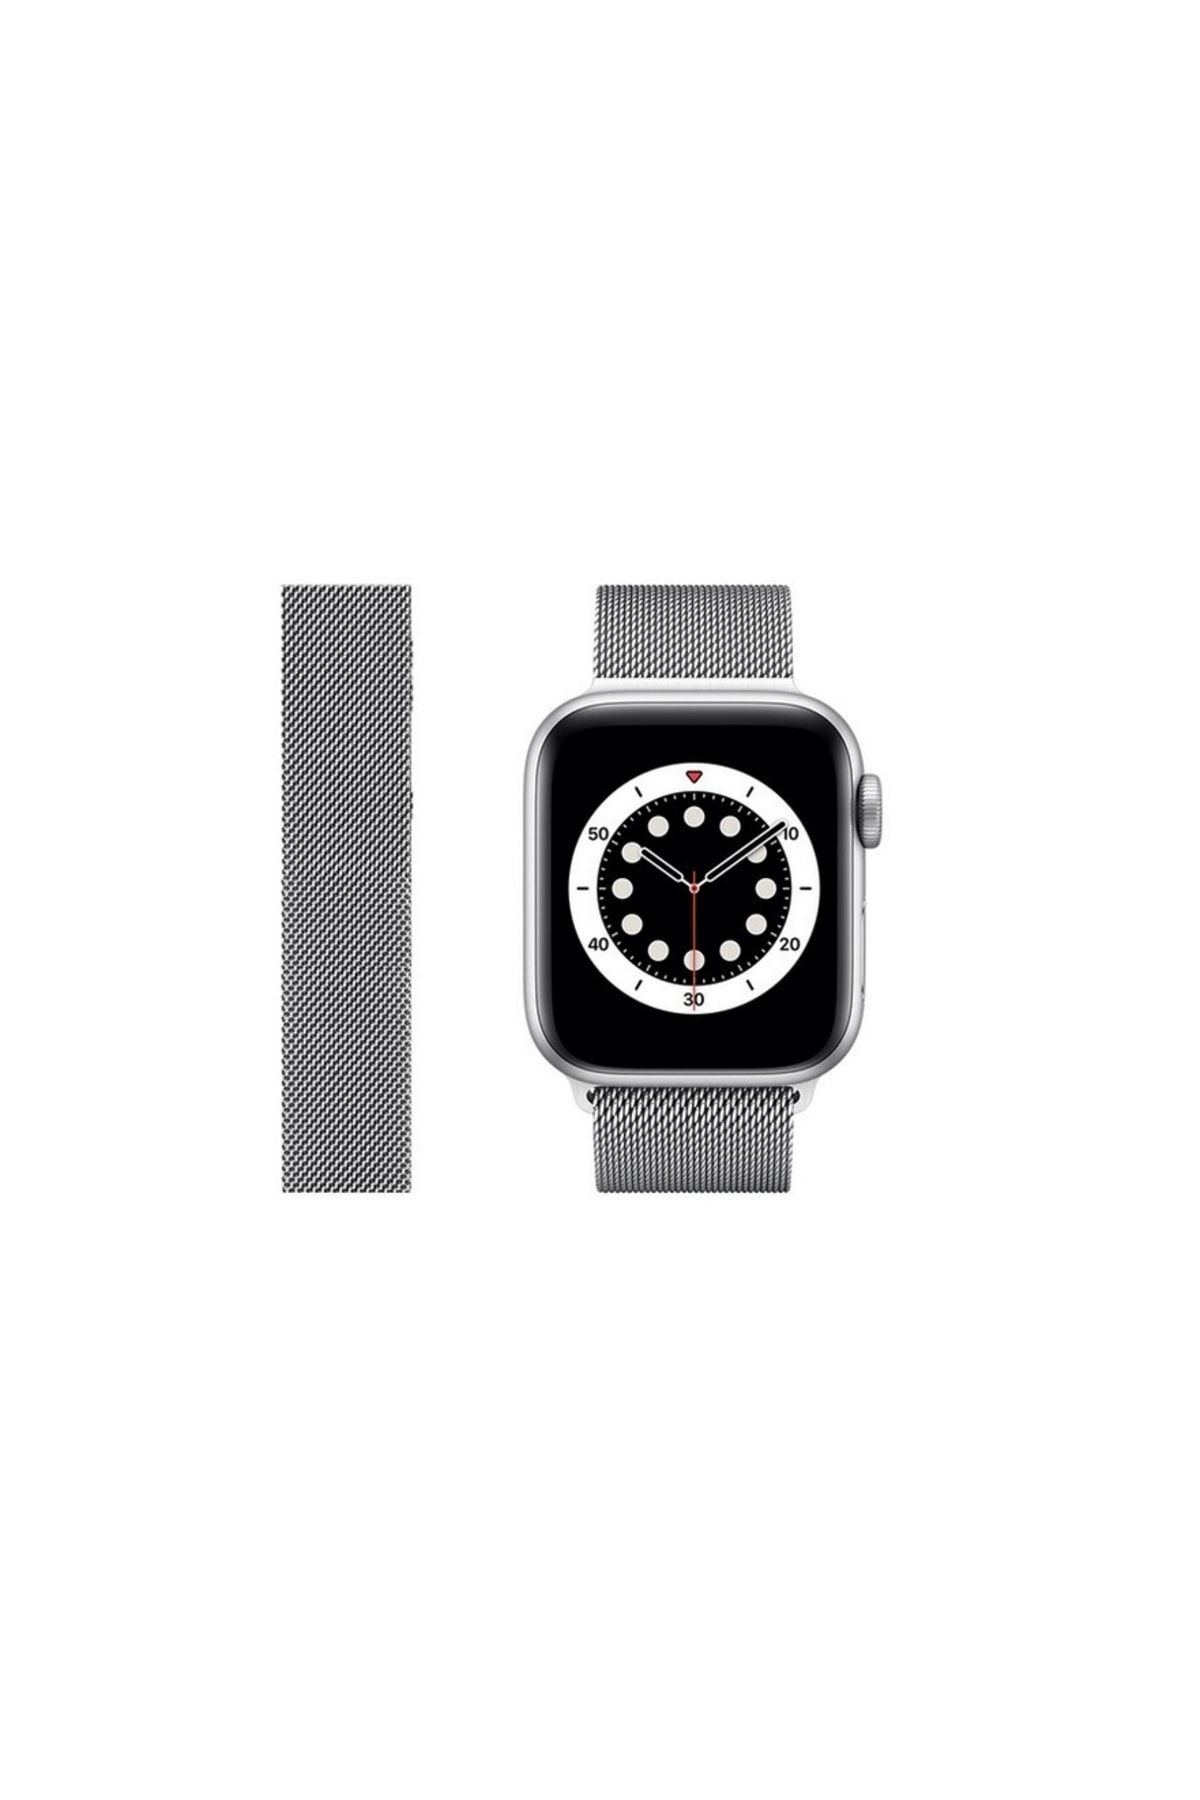 GREGOSS Lüx Apple Watch 1 2 3 4 5 6 7 8 Se Uyumlu 1400 Mah